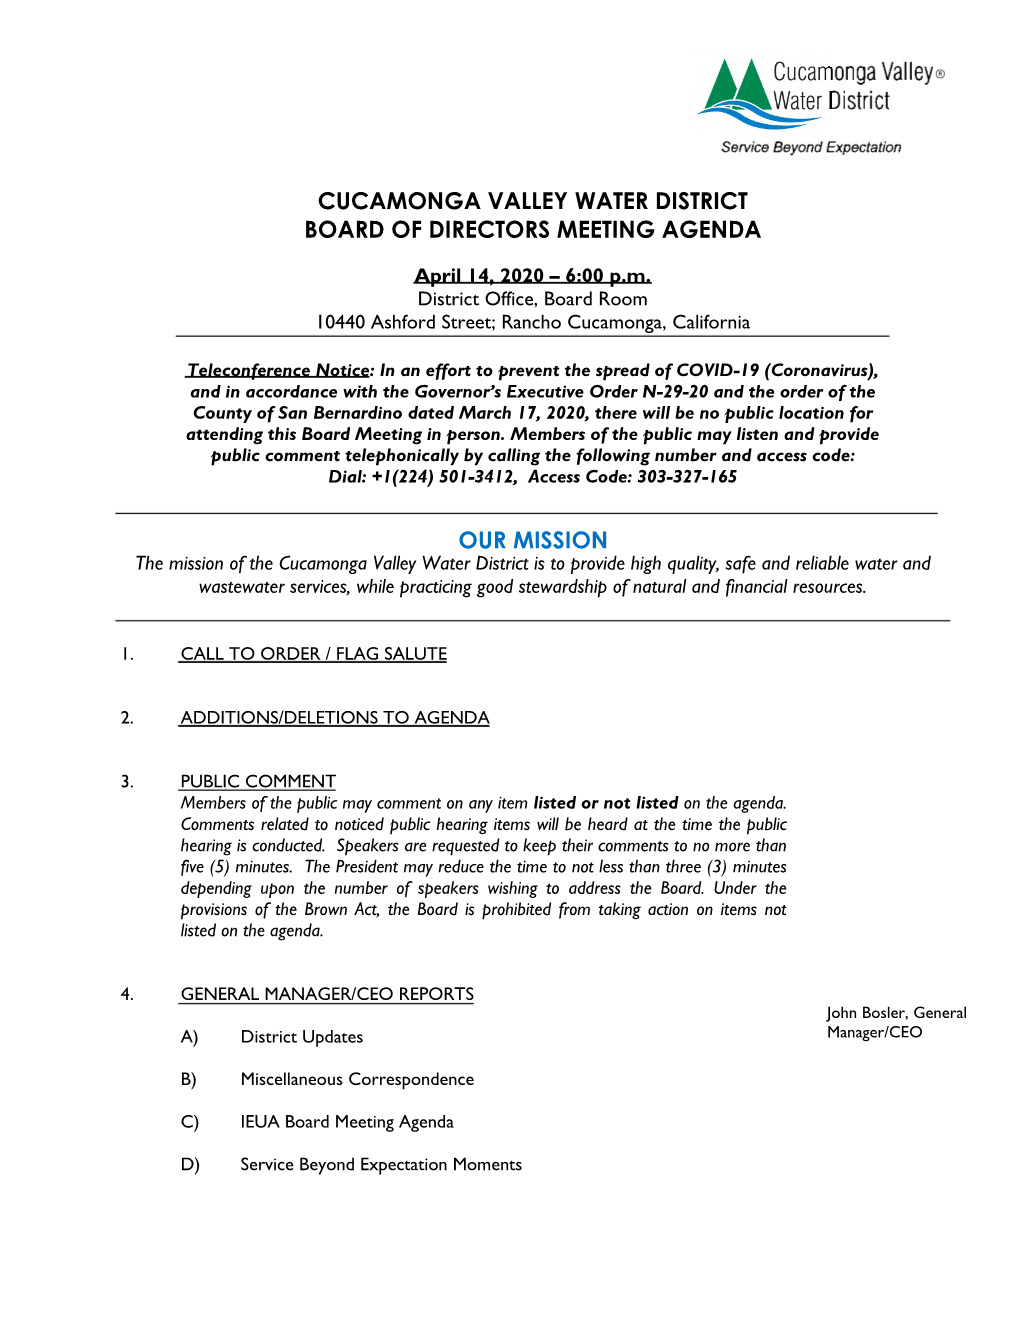 Cucamonga Valley Water District Board of Directors Meeting Agenda